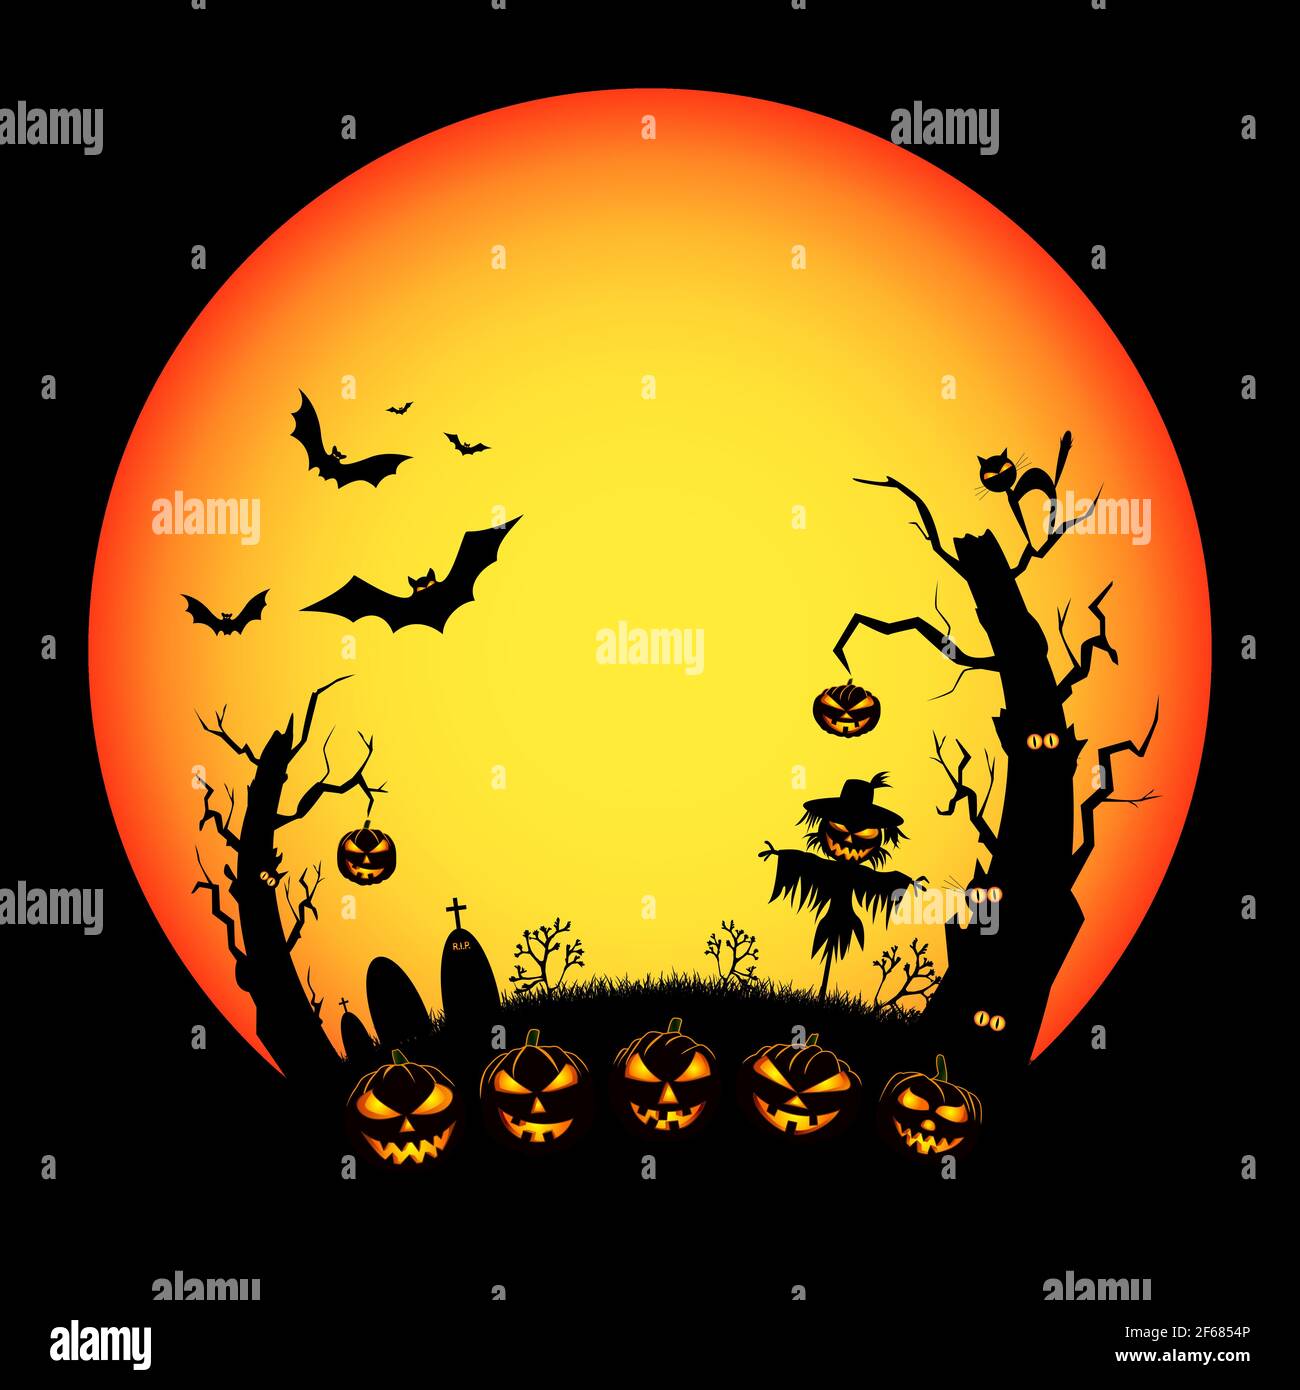 Cartoon Halloween eve night scene. Pumpkins with burning eyes. Big red moon. Bats in flight. Old trees. Cemetery. Scarecrow. Black Cats. Stock Vector